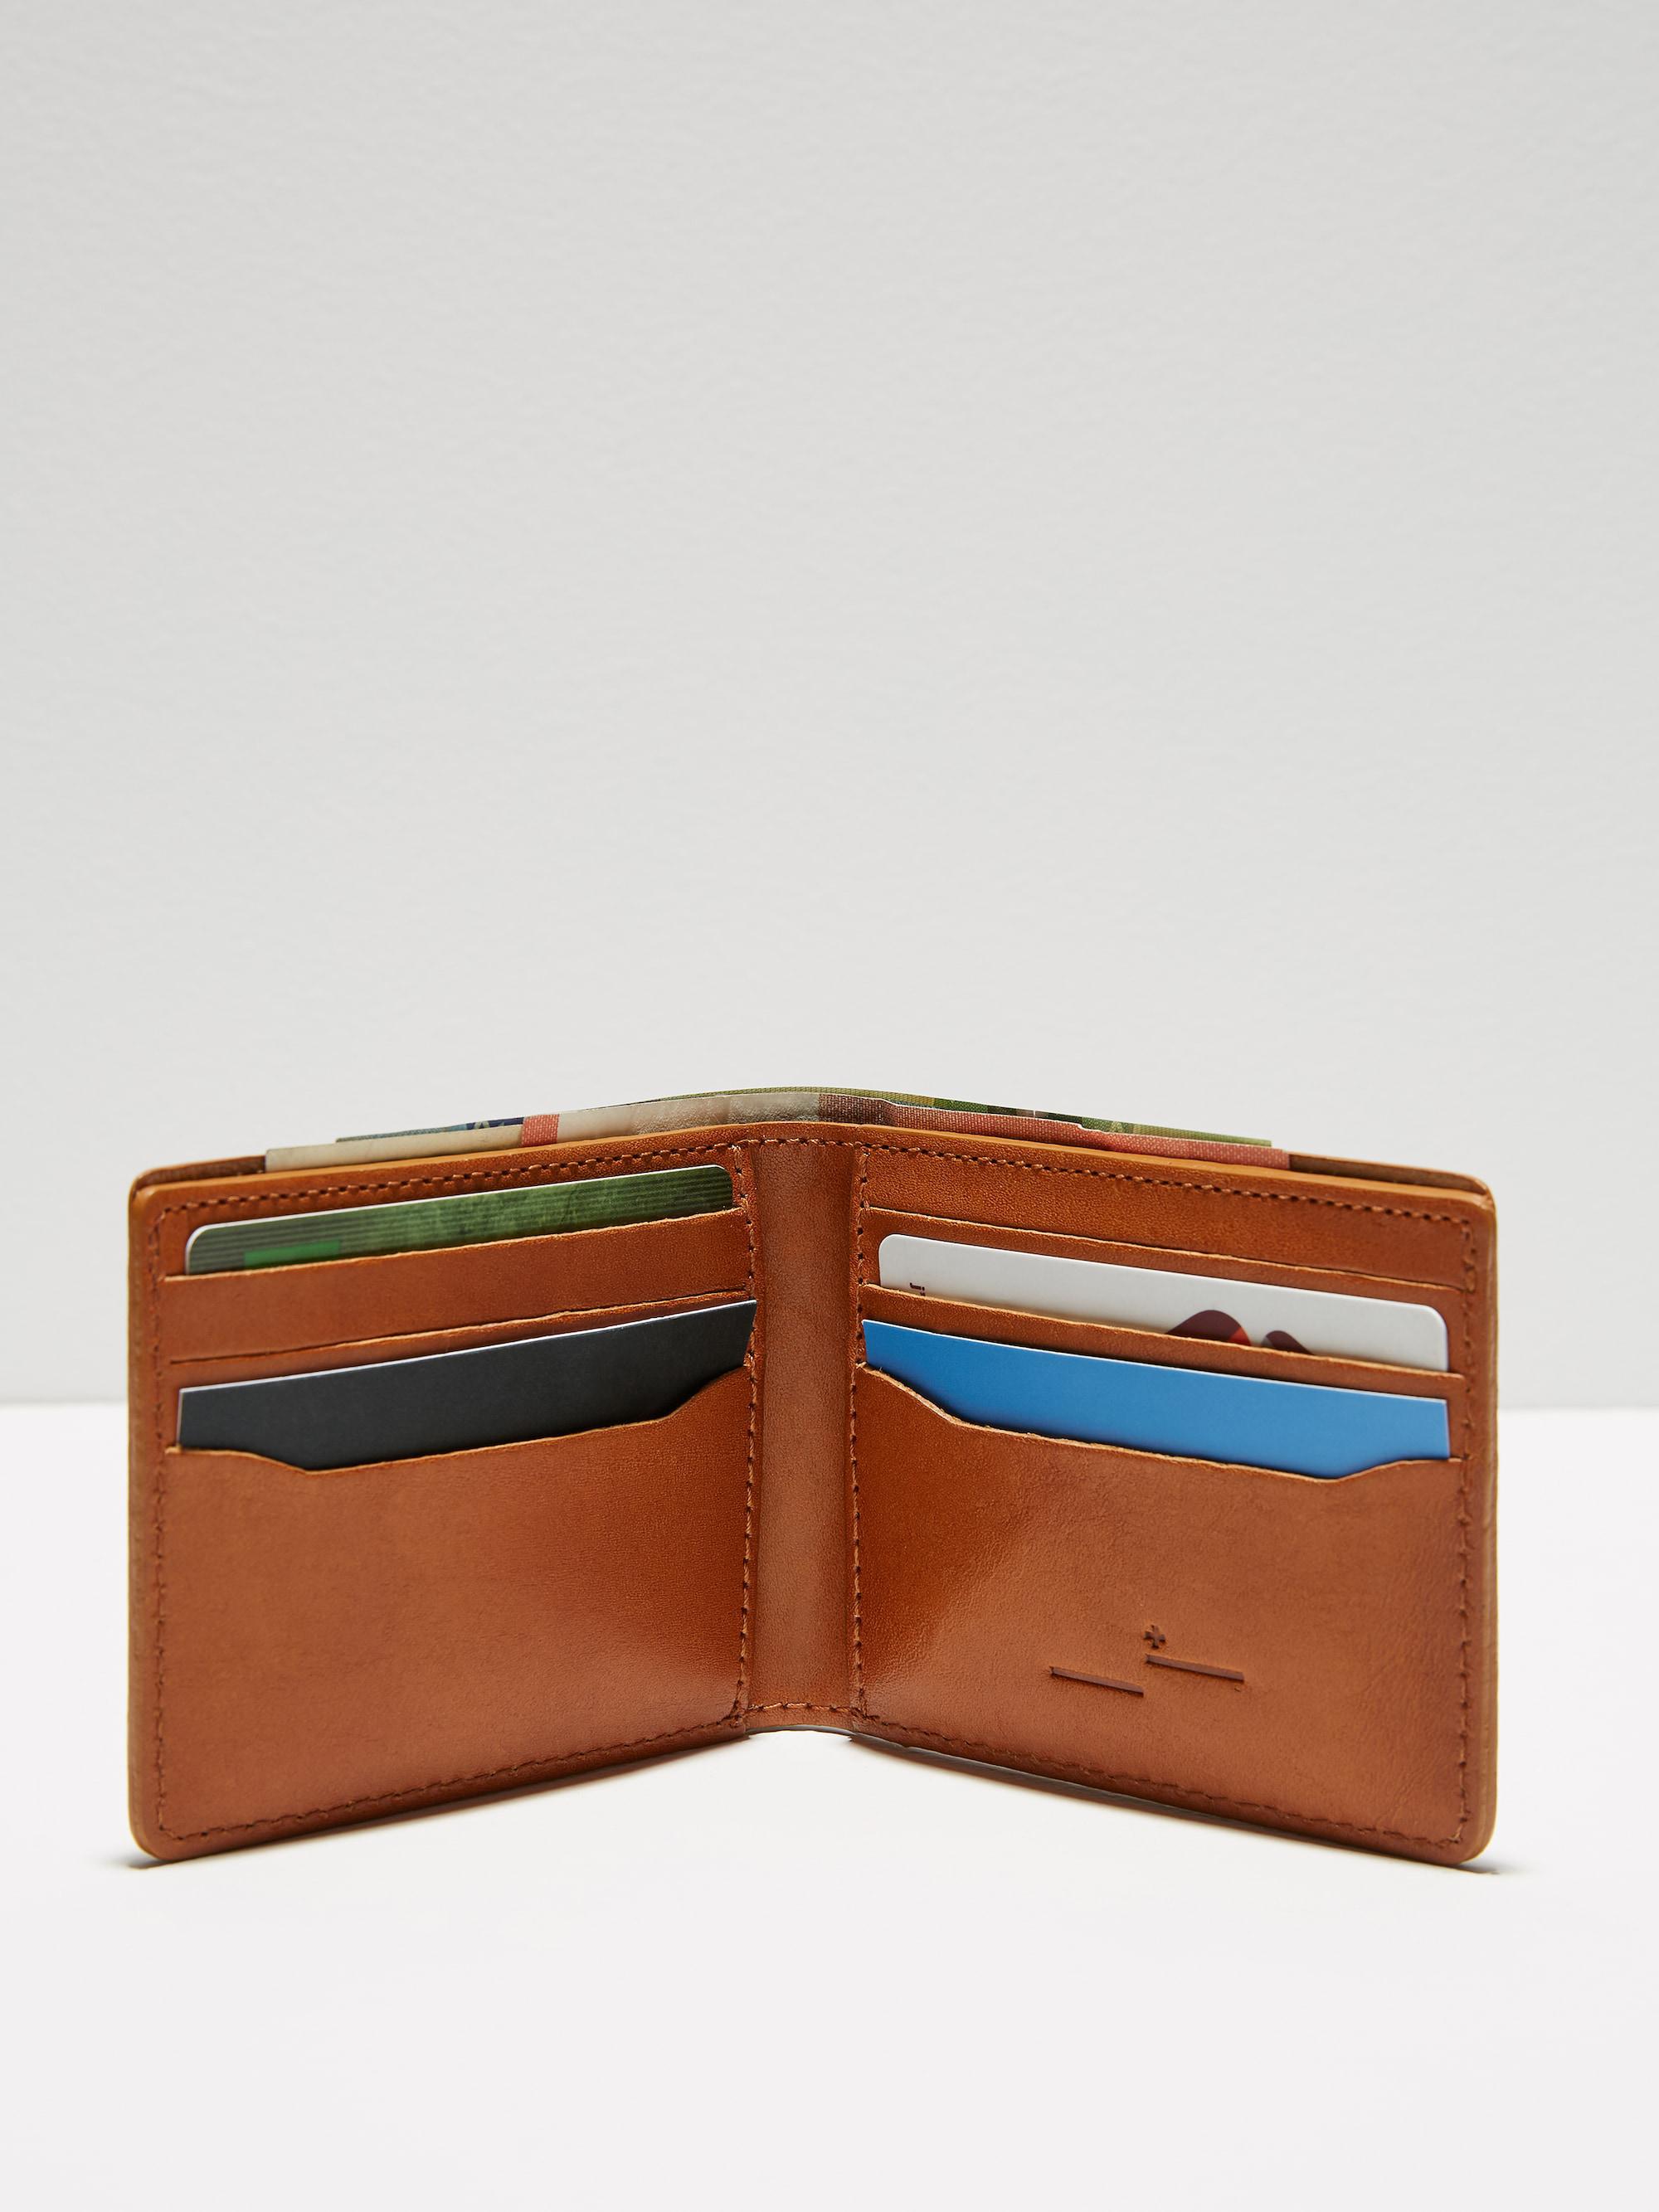 Lyst - Frank And Oak Leather Bill Fold Wallet In Cognac in Brown for Men